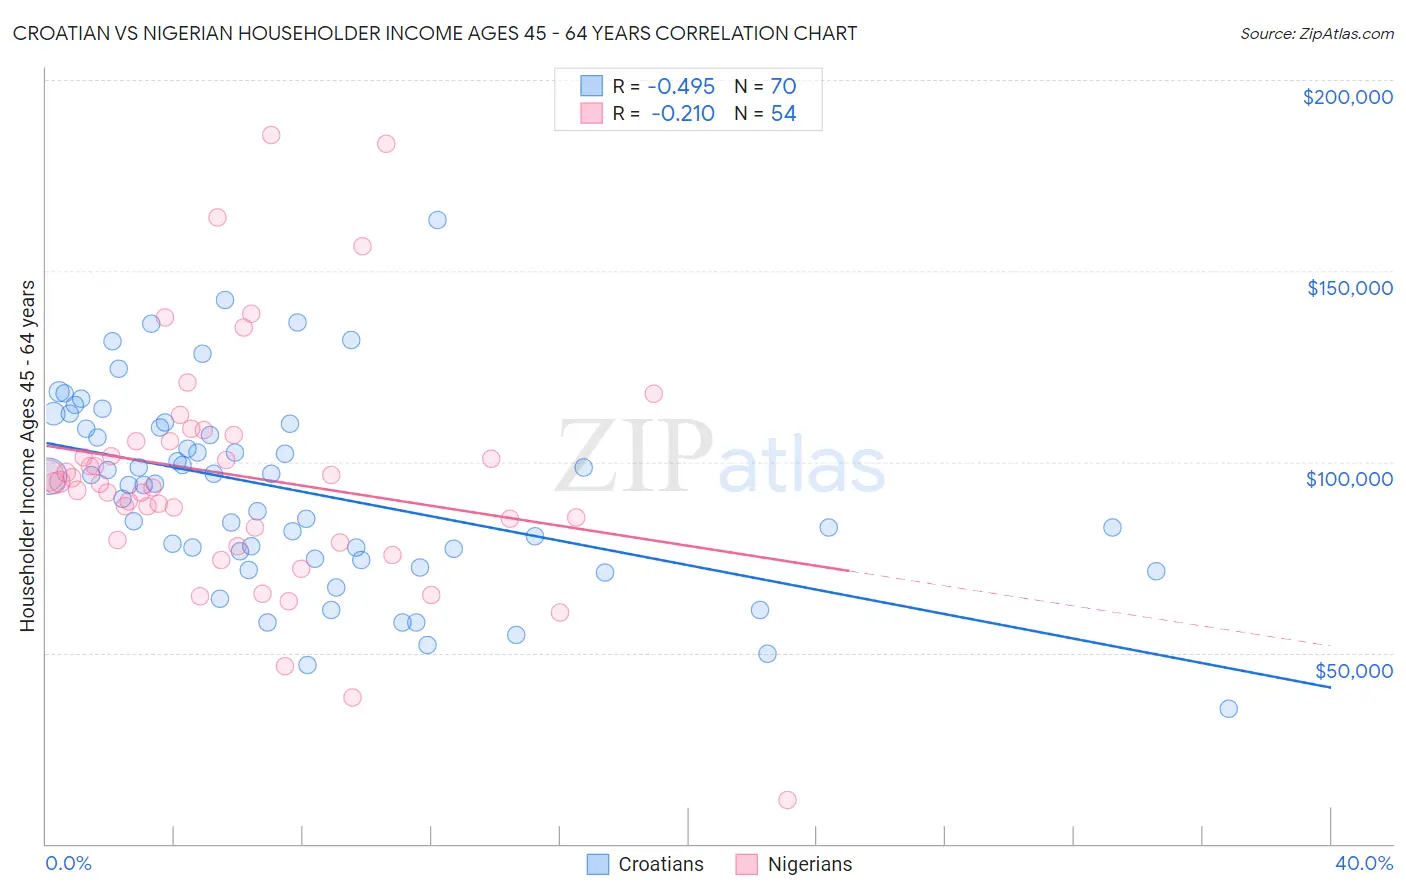 Croatian vs Nigerian Householder Income Ages 45 - 64 years